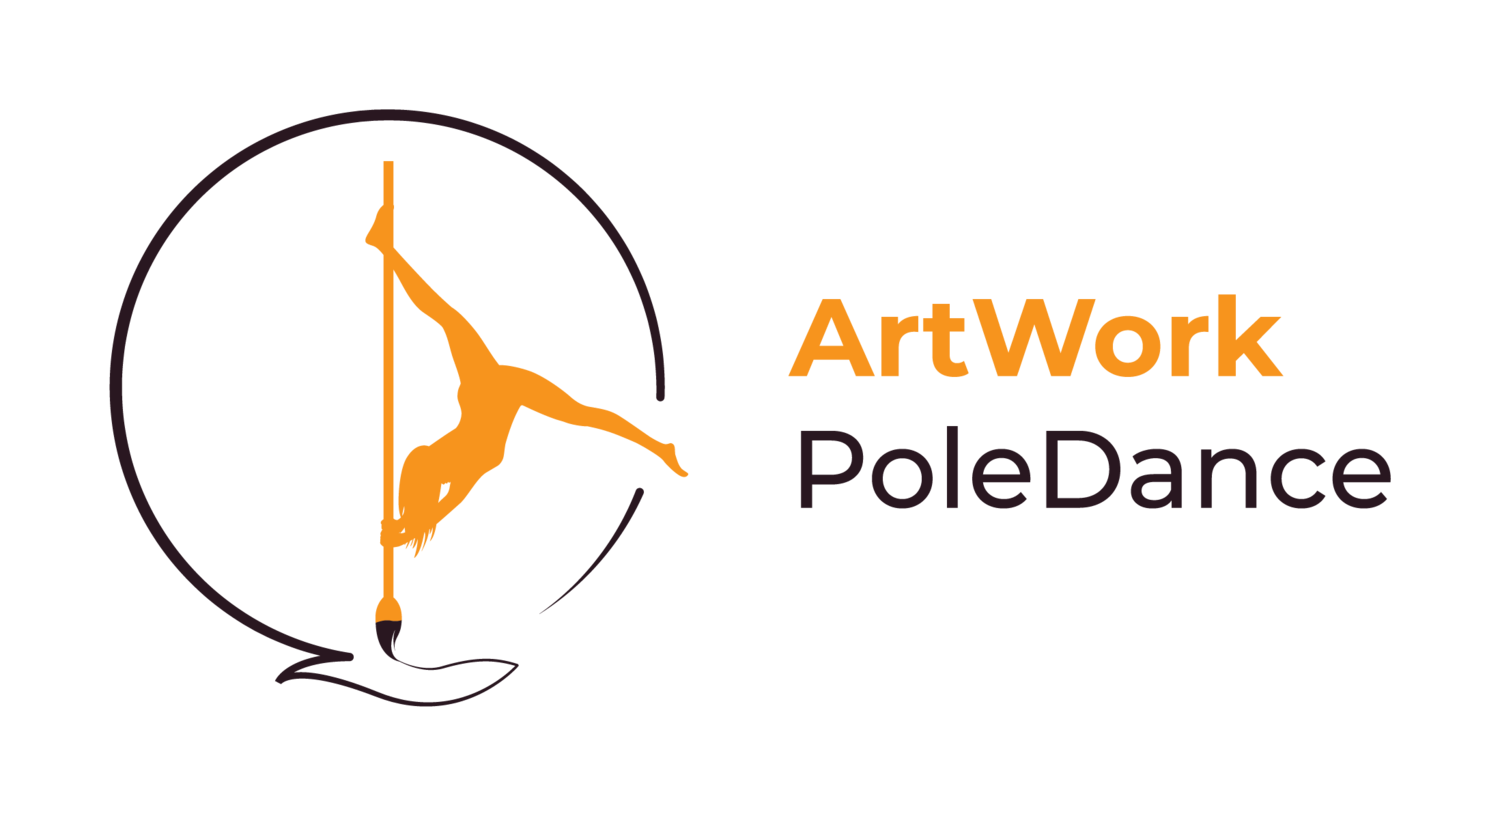 ArtWork PoleDance